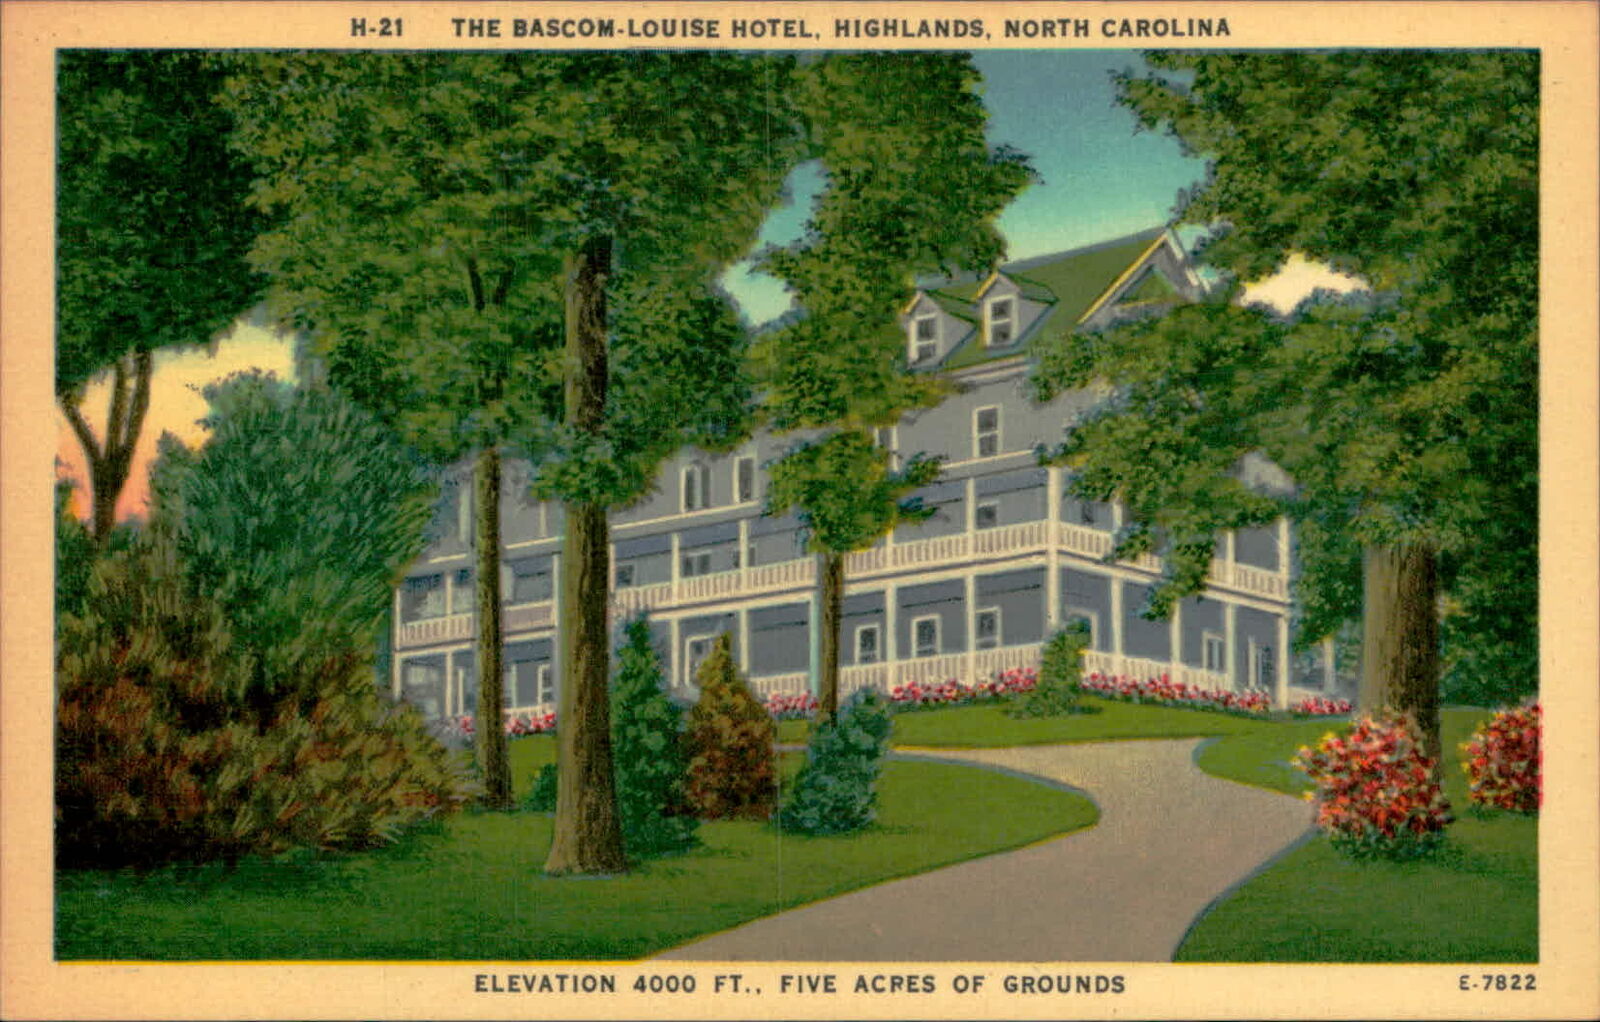 Postcard: H-21 THE BASCOM-LOUISE HOTEL, HIGHLANDS, NORTH CAROLINA A WO